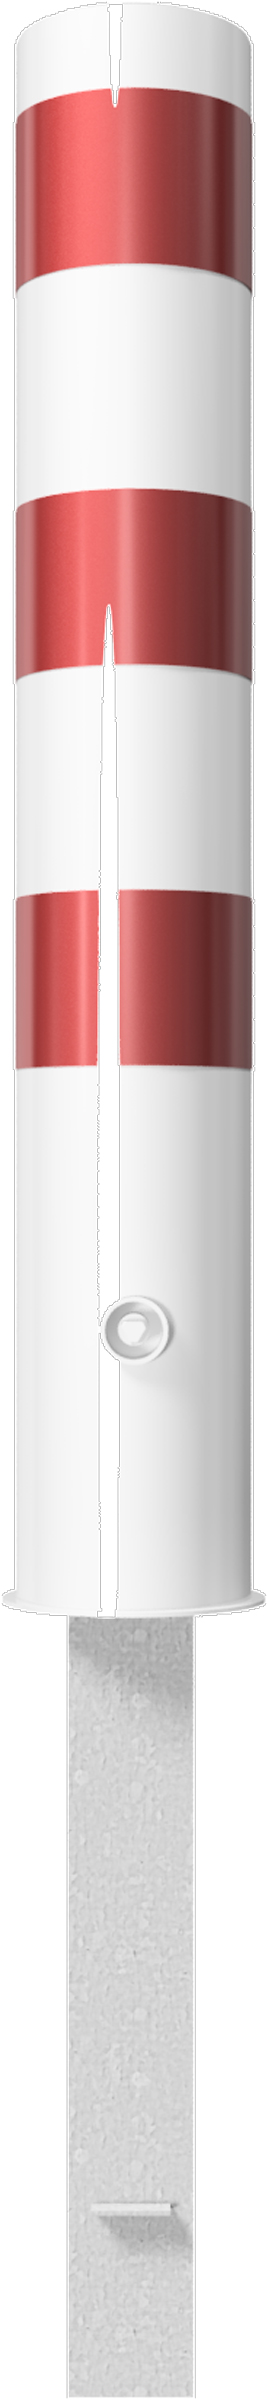 Schake Stahlrohrpoller HD Ø 152 mm weiß | rot - 1,50 m